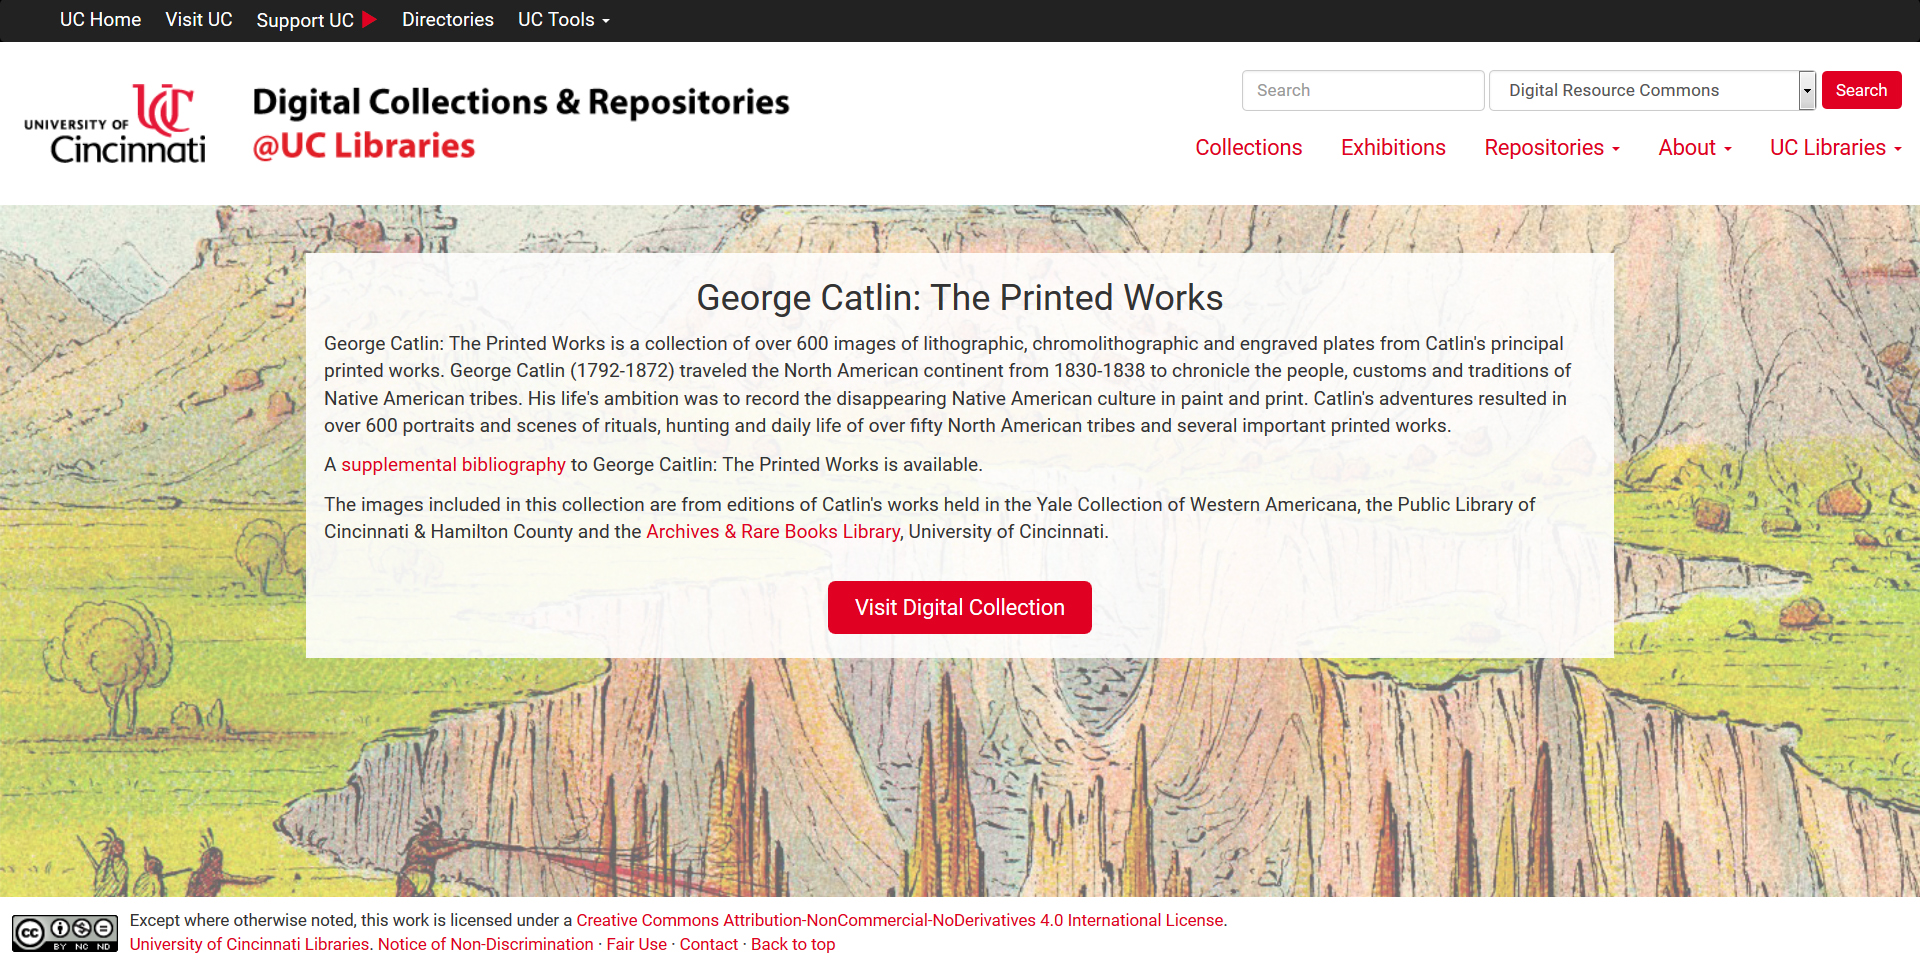 George Catlin: The Printed Works